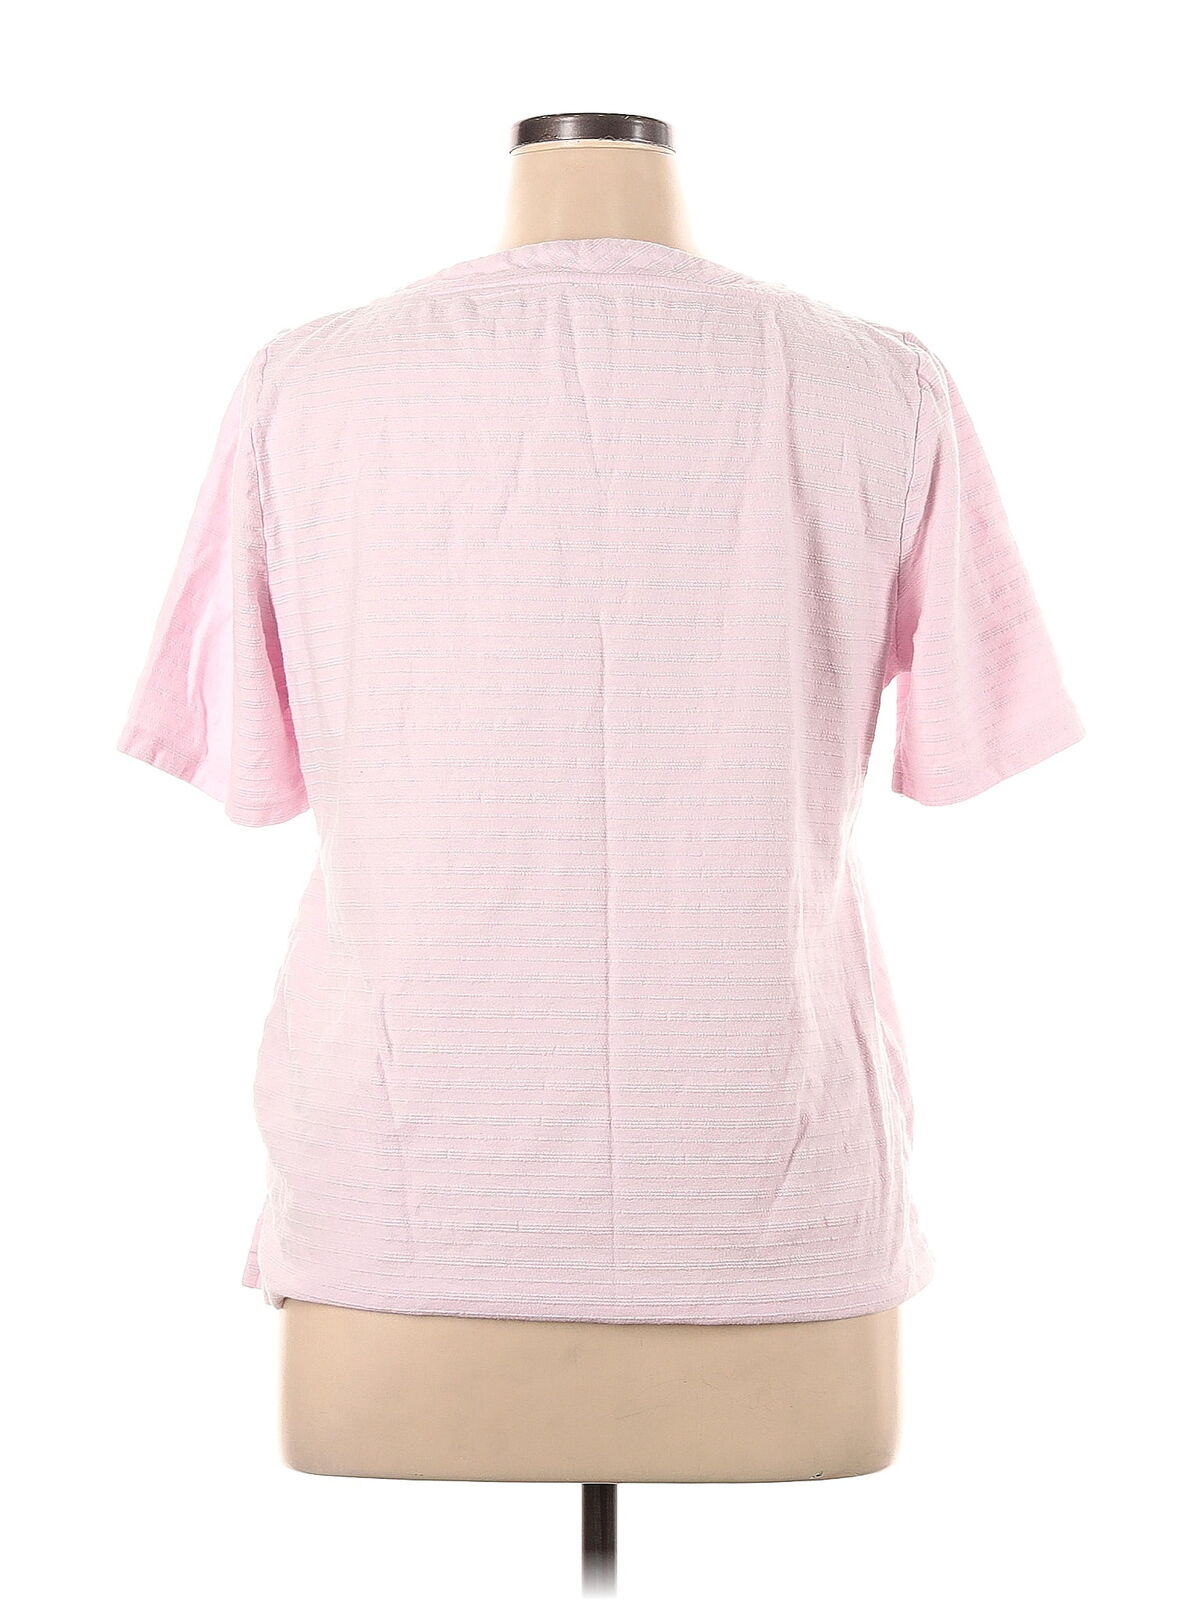 Talbots Women Pink Short Sleeve Top XL - image 2